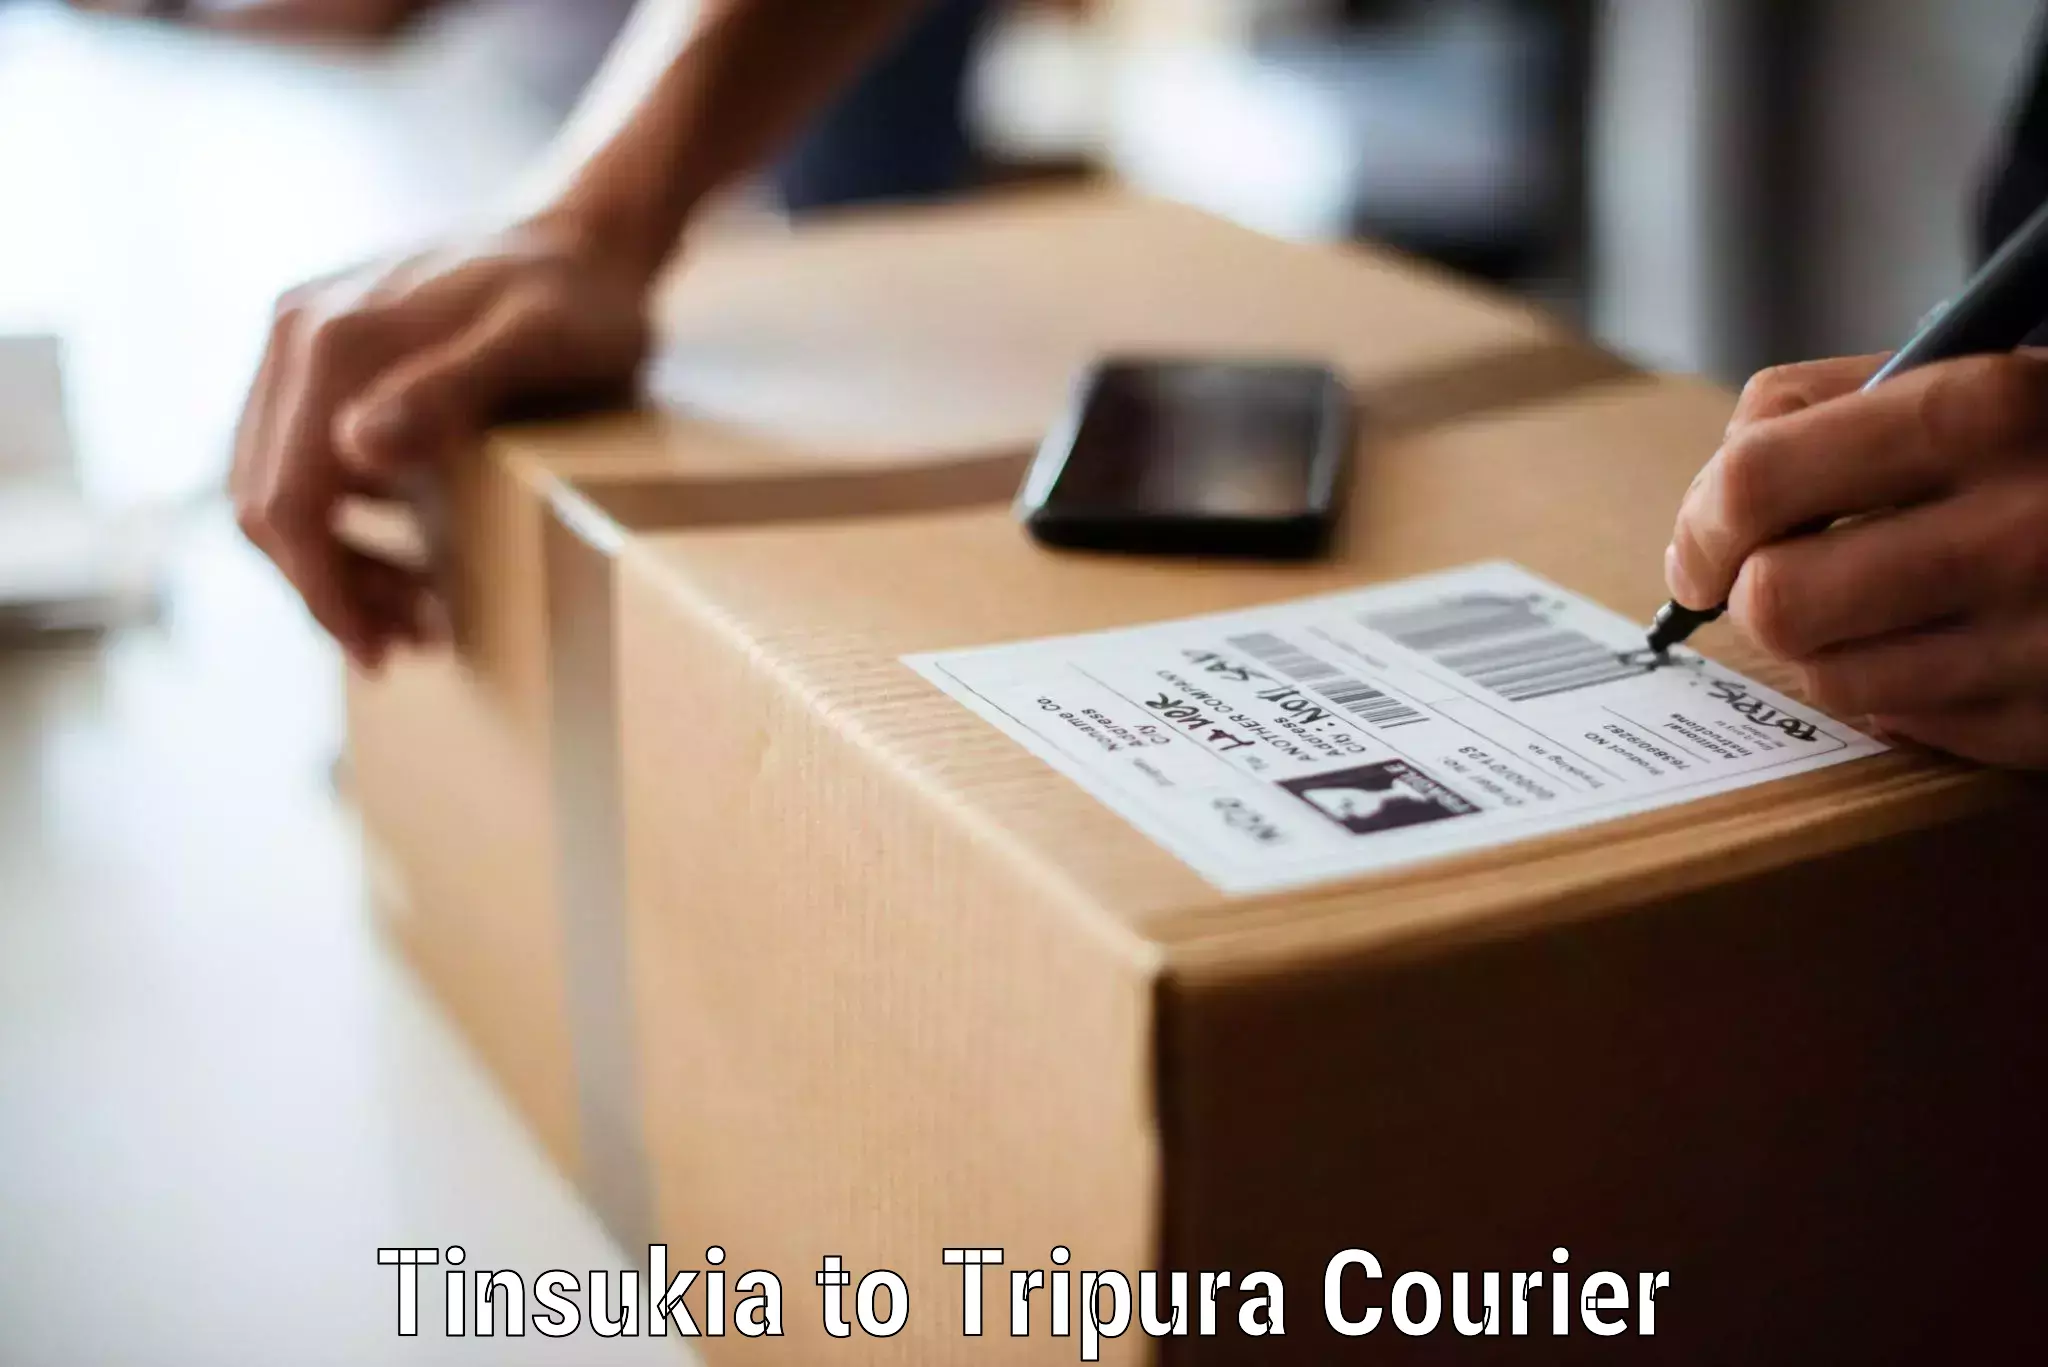 Professional packing and transport Tinsukia to Udaipur Tripura